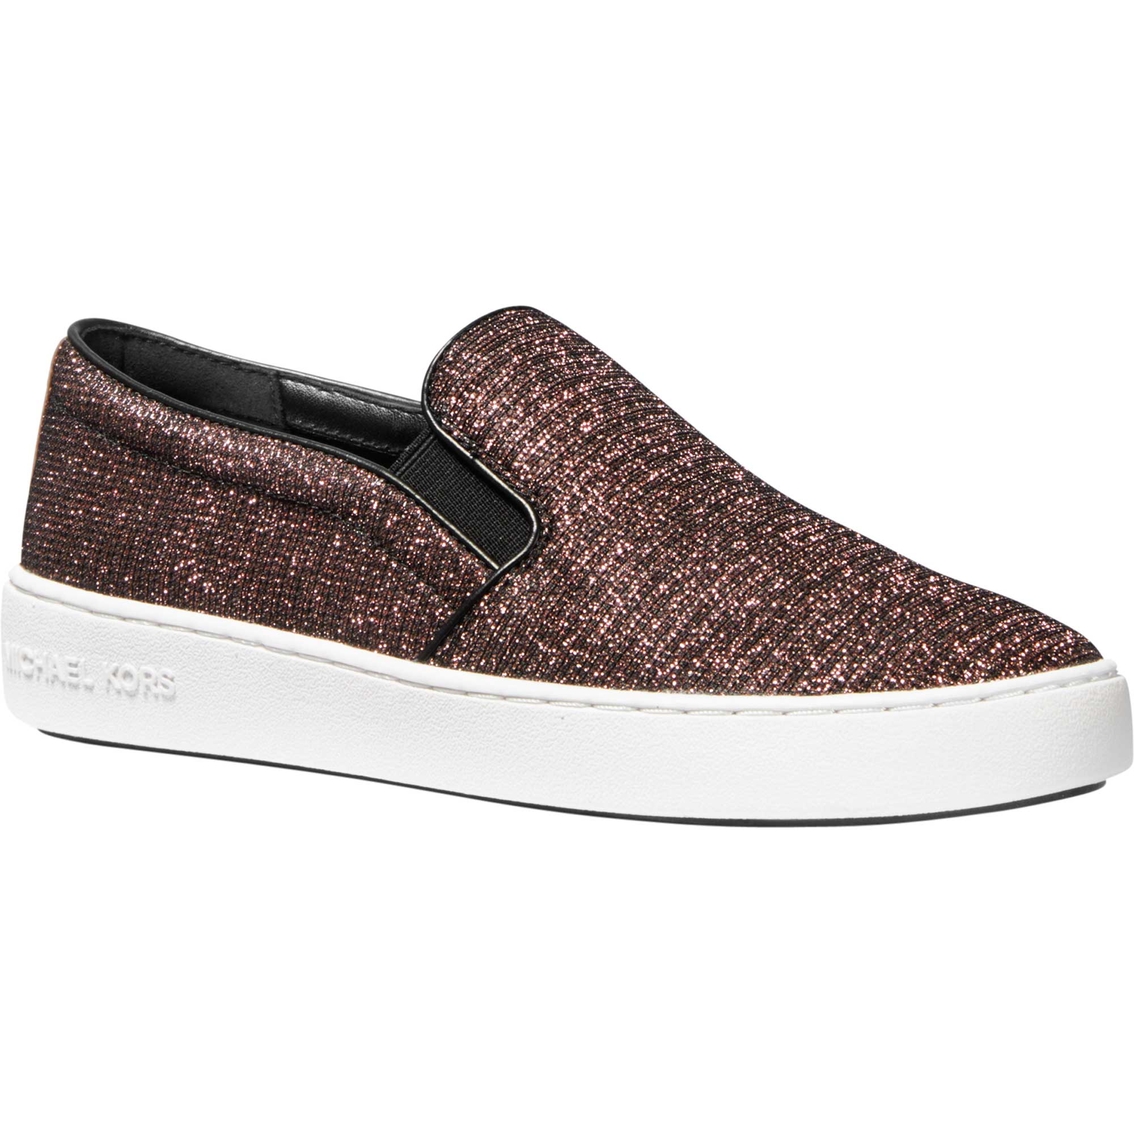 Michael Kors Keaton Slip On Shoes | Sneakers | Shoes | Shop The Exchange